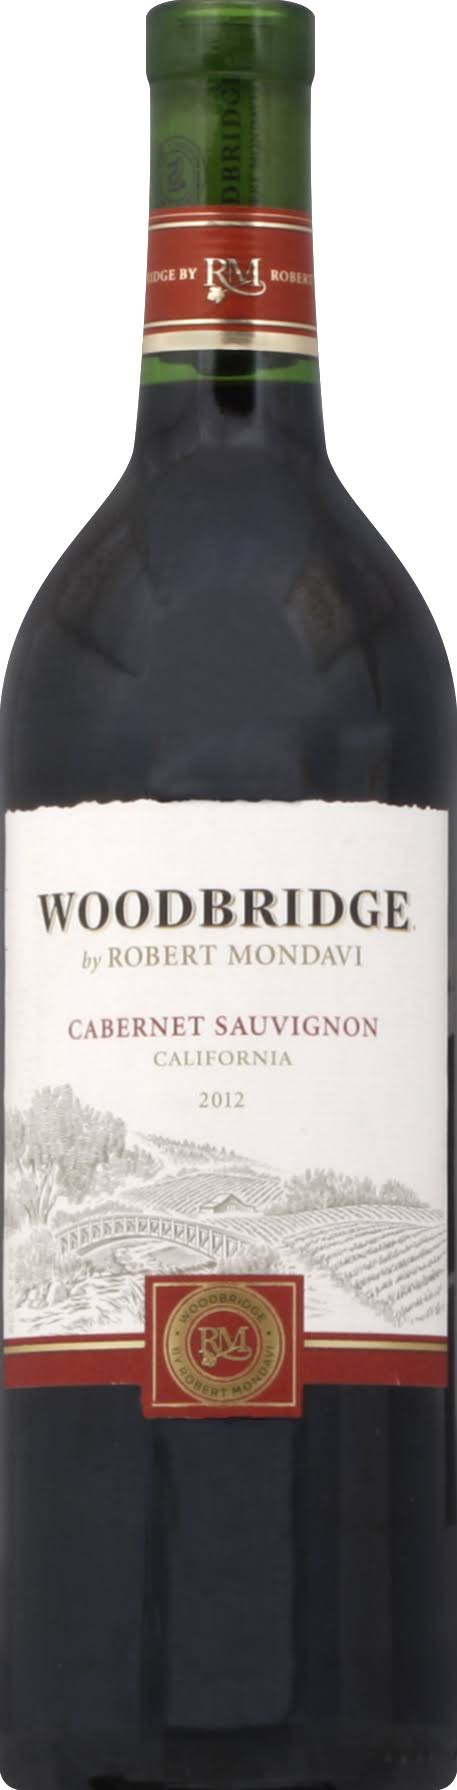 Woodbridge by Robert Mondavi Cabernet Sauvignon - California, USA